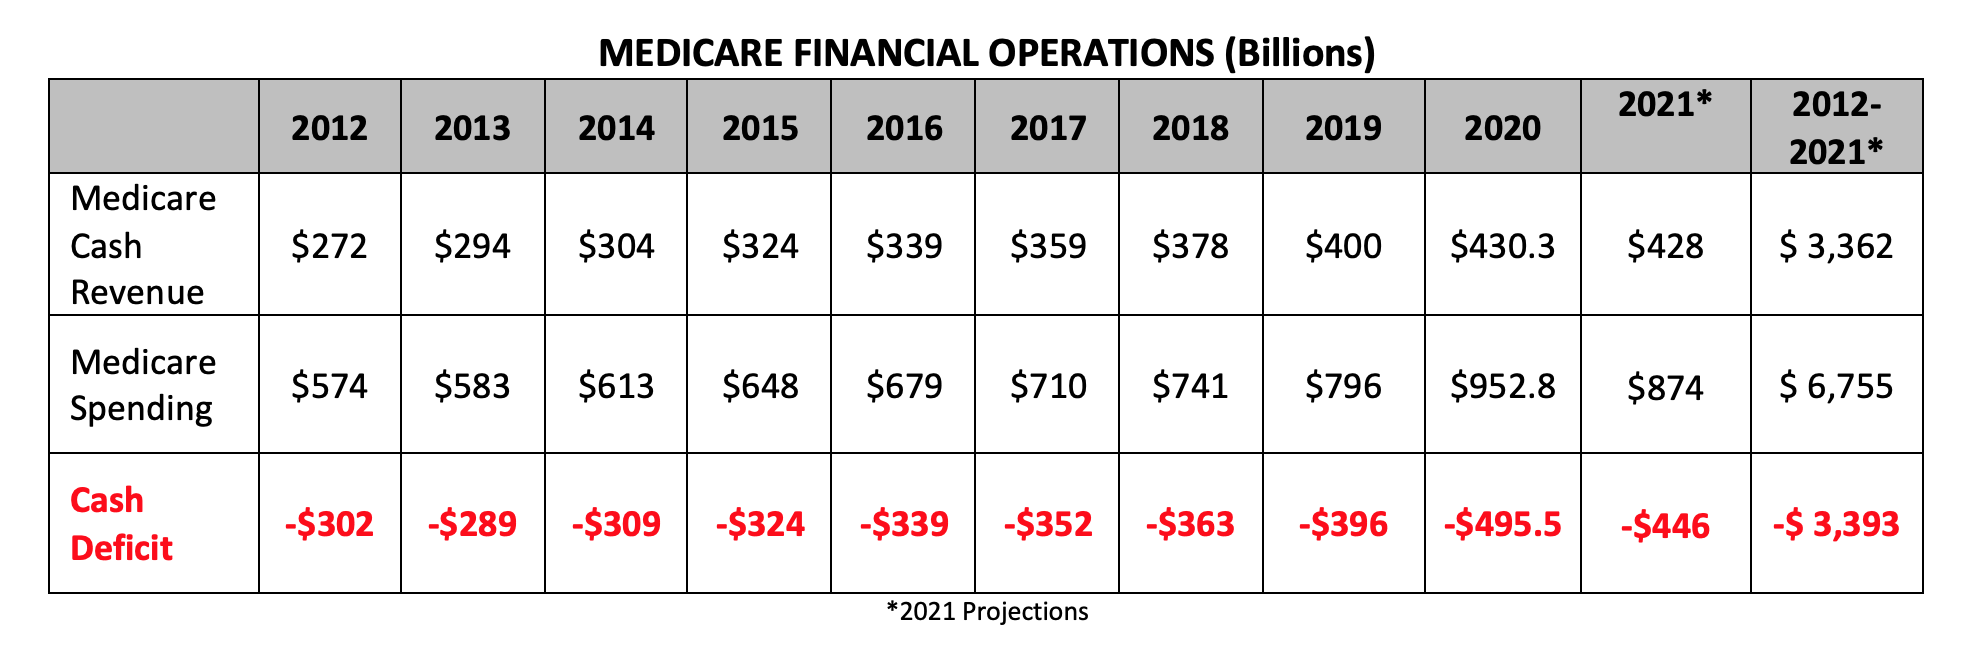 Medicare Financial Operations (Billions) chart